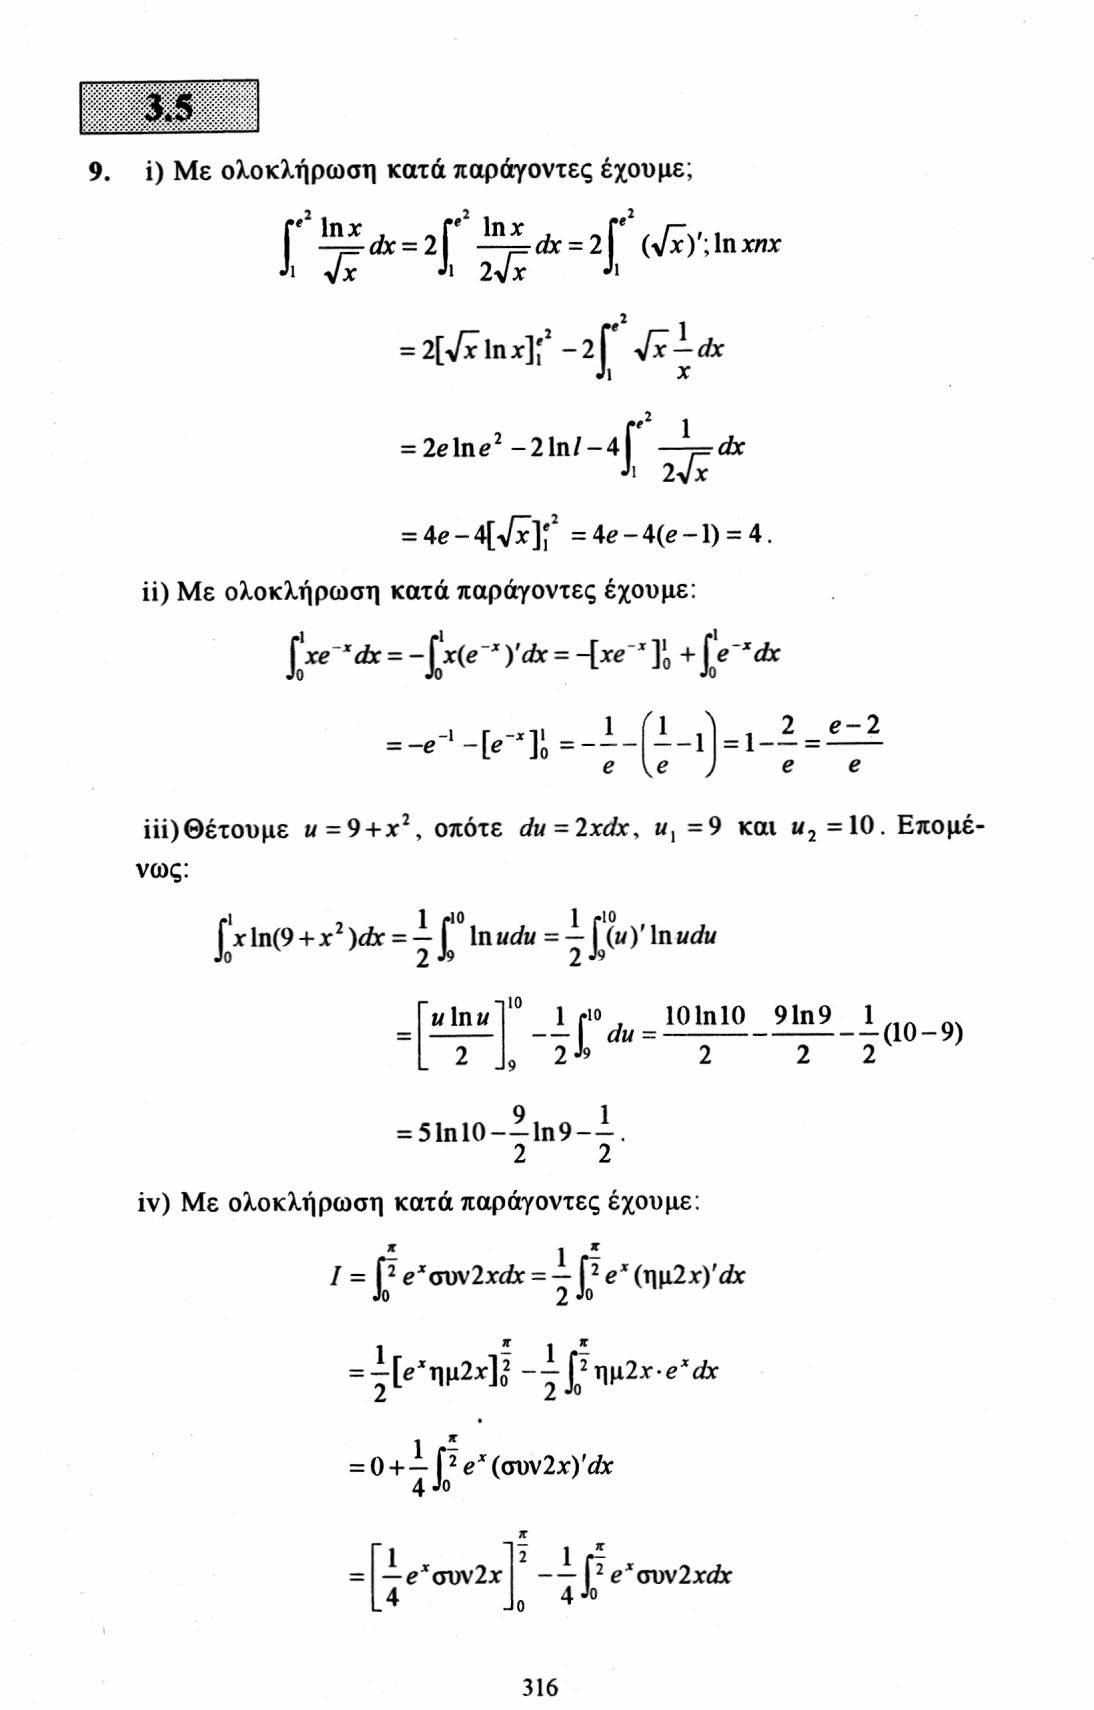 9. i) Με ολοκλήρωση κατά παράγοντες έχουμε; Γ* ίη Λ= Γ" & = Γ' ( >/*)'; In xnx Jl -Jx J 1 -Jx J' = lufx lnx]f -f -Jx dx Ji χ = elne -1n/ dx -Jx = 4e-4[Vx]' = 4e-4(e-l) = 4.